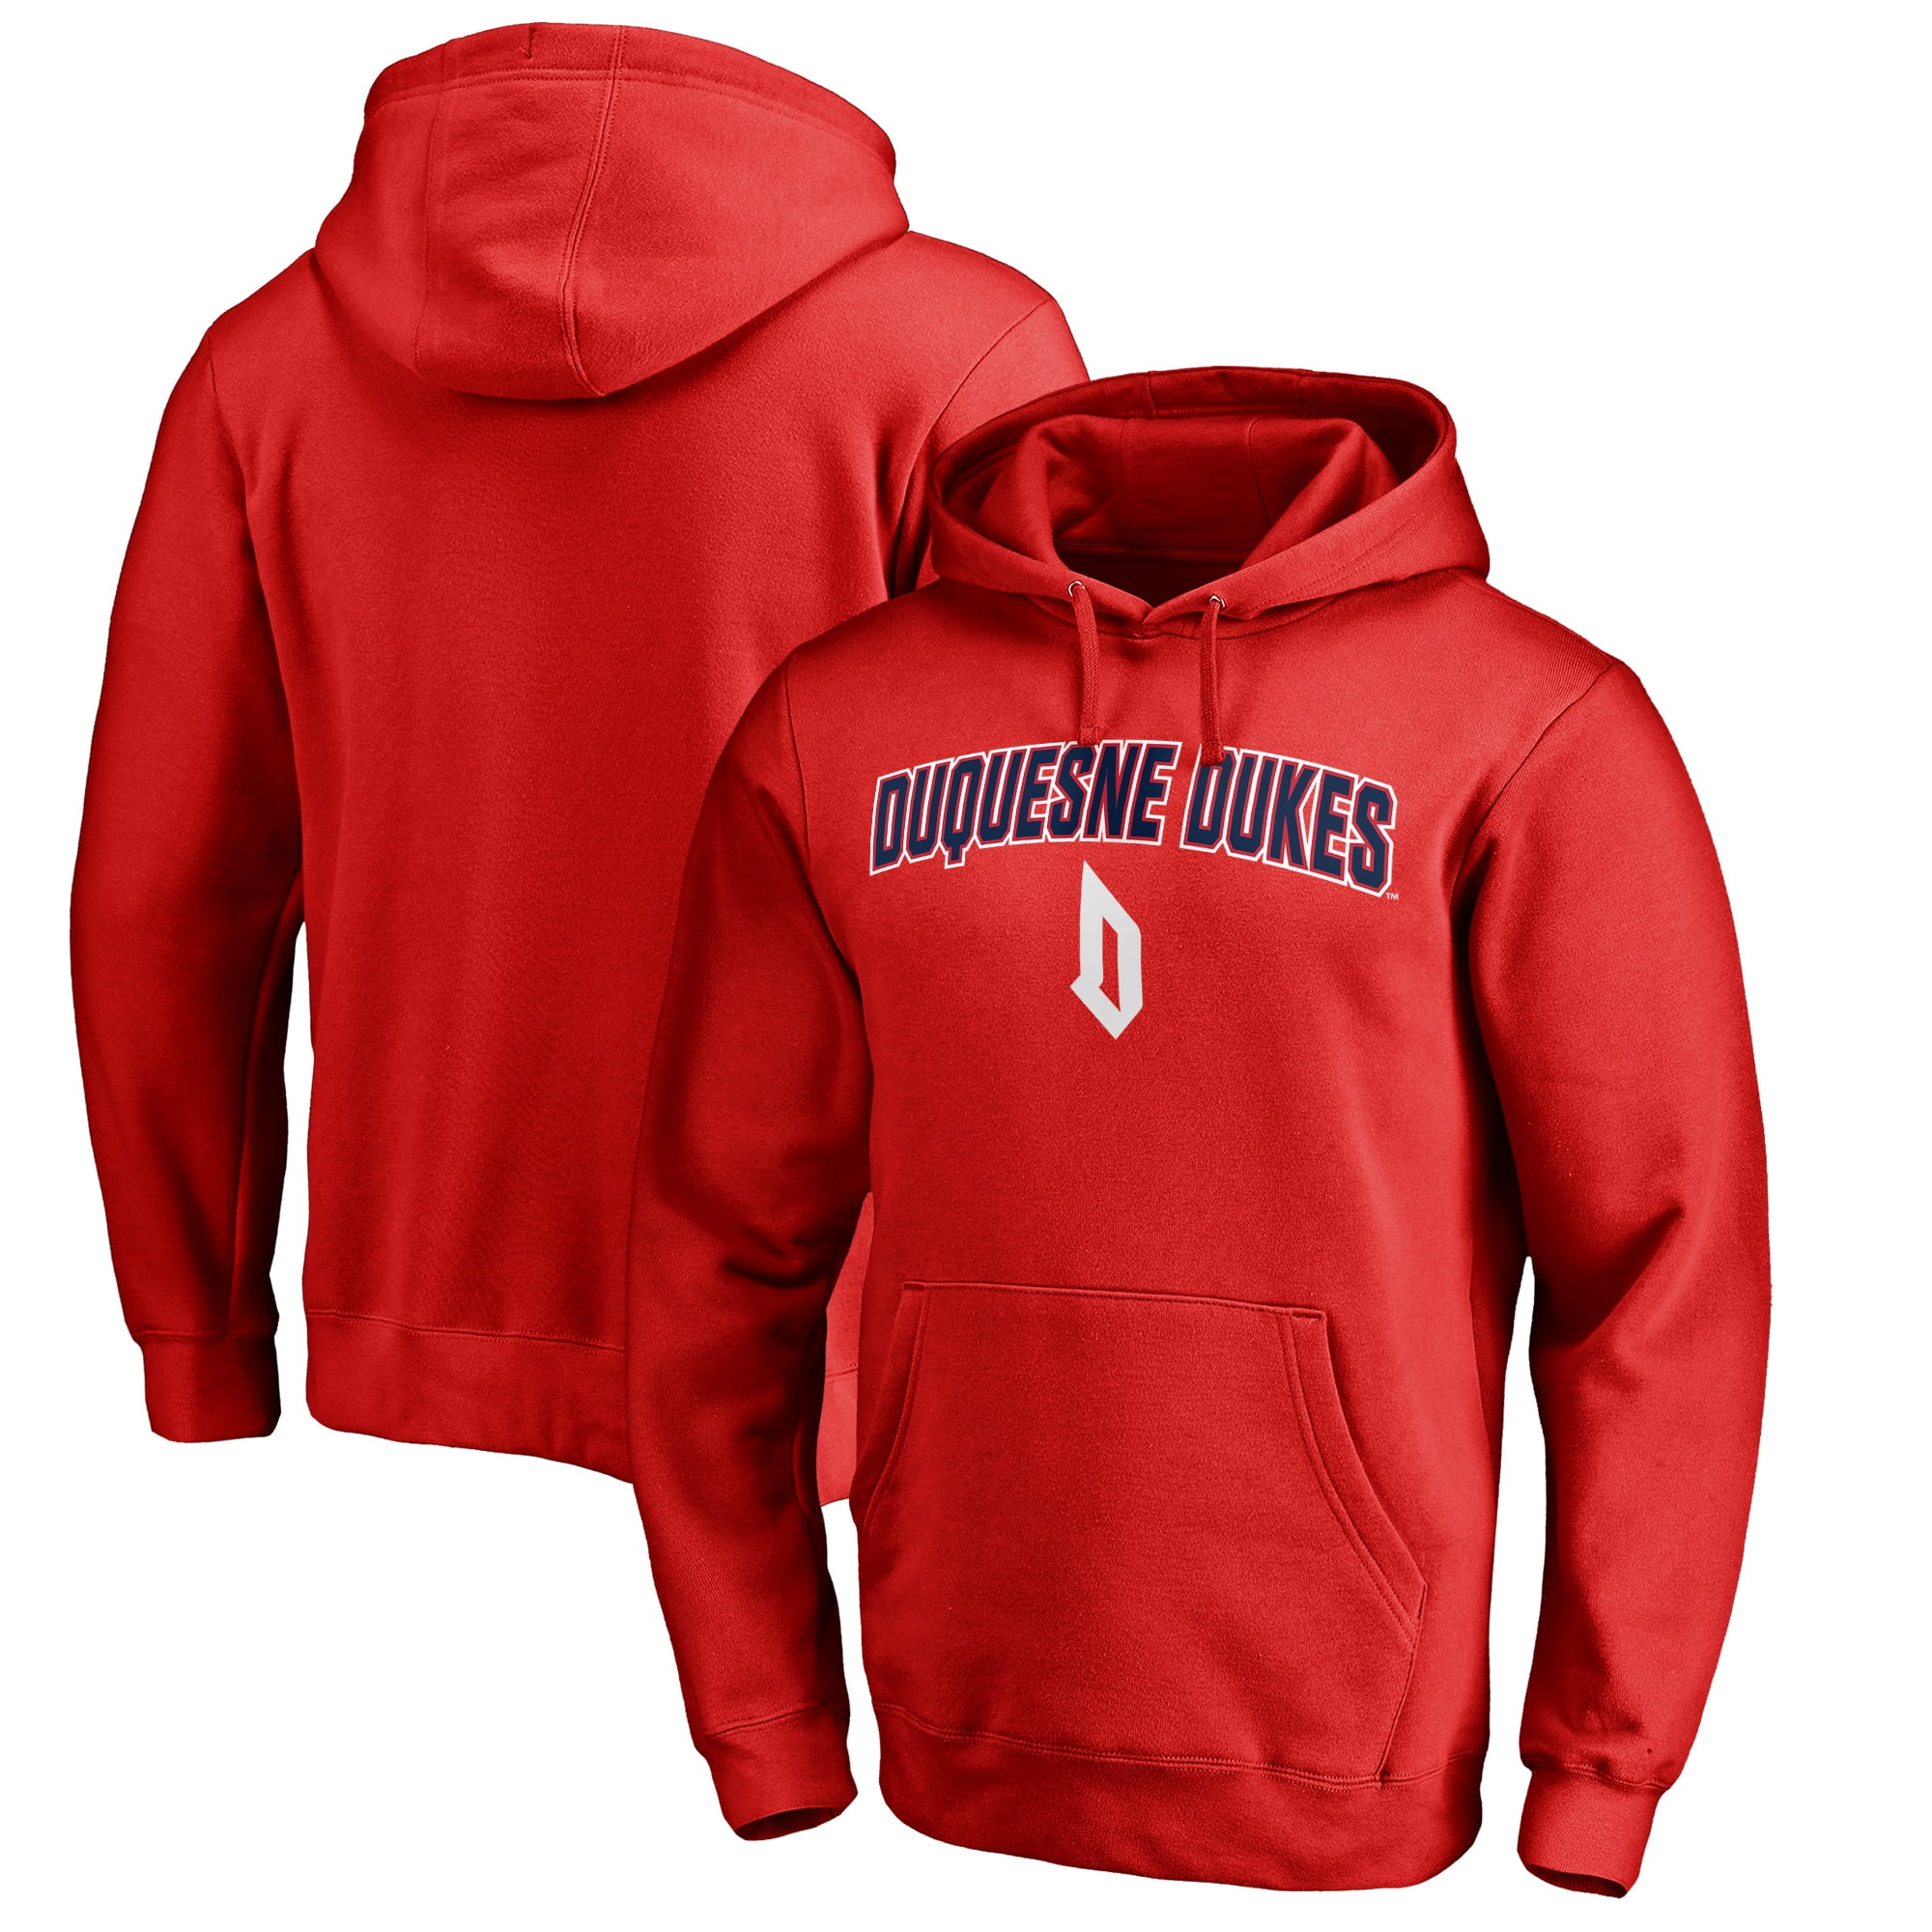 Duquesne Dukes Proud Mascot Pullover Hoodie - Scarlet - Walmart.com ...